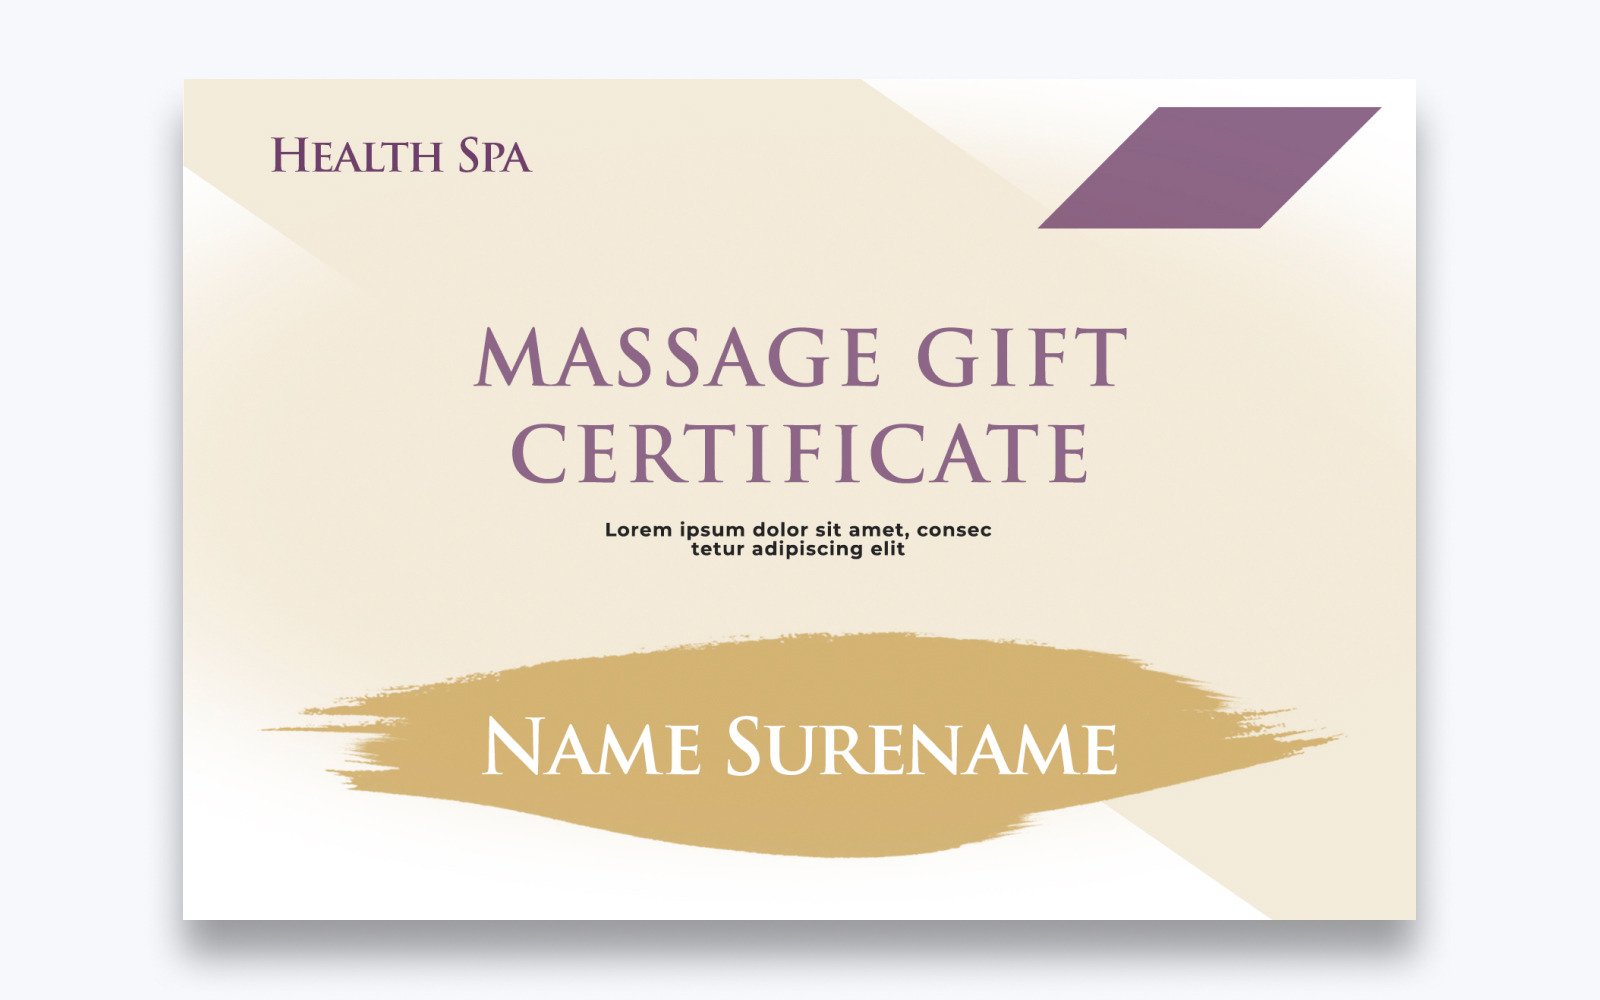 do massage gift certificates expire